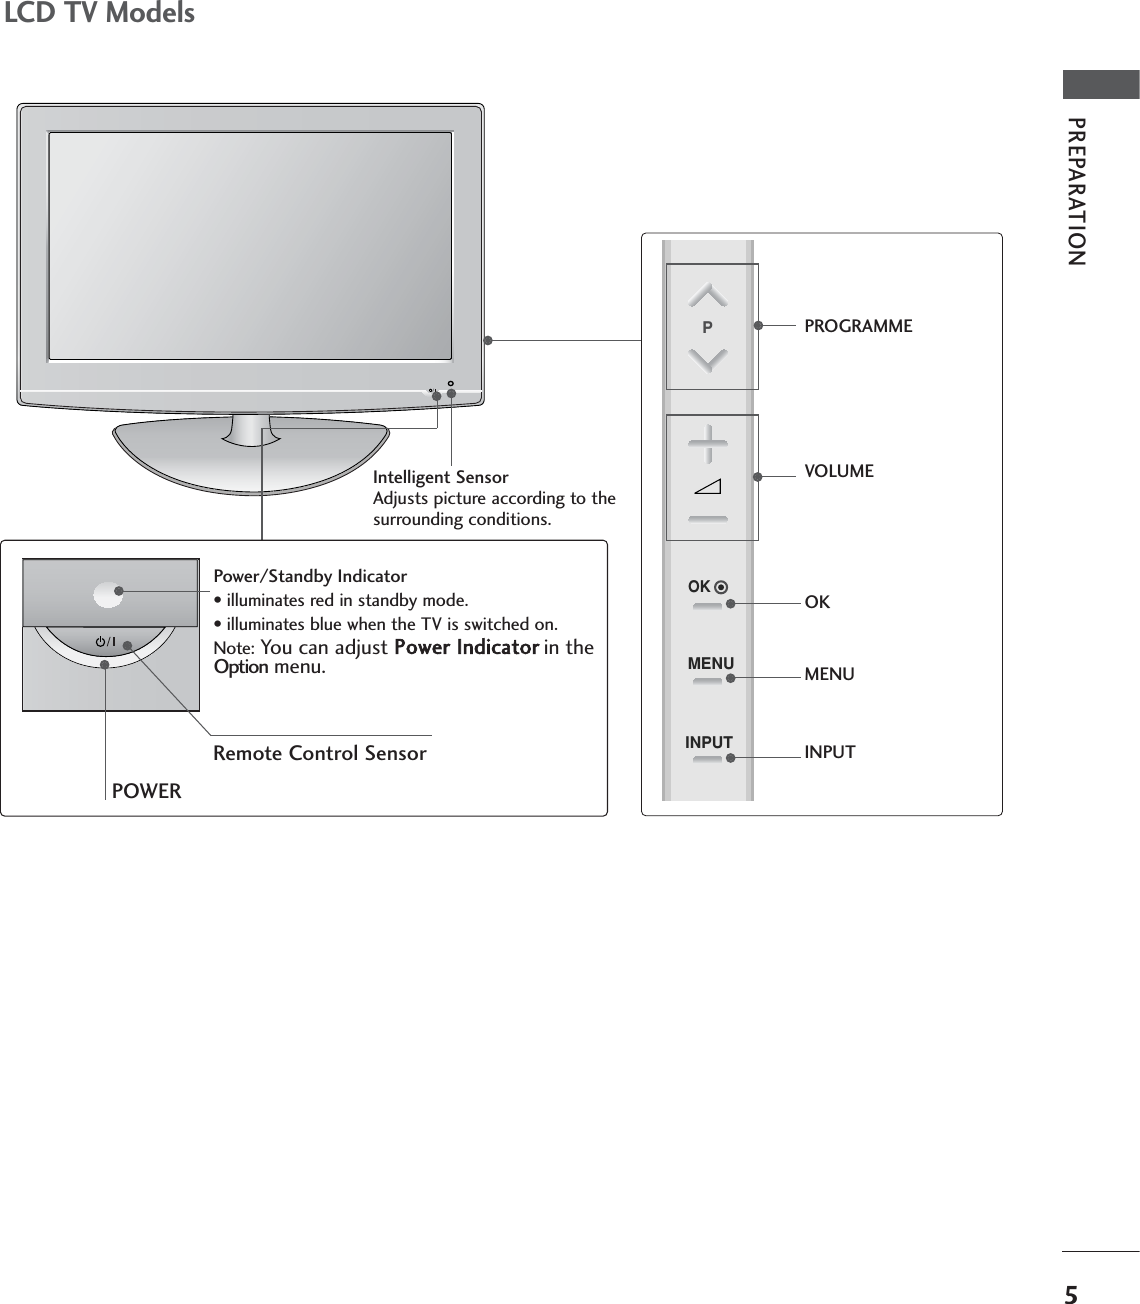 5PREPARATIONLCD TV Models POWERPower/Standby Indicator• illuminates red in standby mode.• illuminates blue when the TV is switched on.Note: You can adjust Power Indicatorin theOption menu.PMENUINPUTOKPROGRAMMEVOLUMEOKMENUINPUTIntelligent SensorAdjusts picture according to thesurrounding conditions. Remote Control Sensor